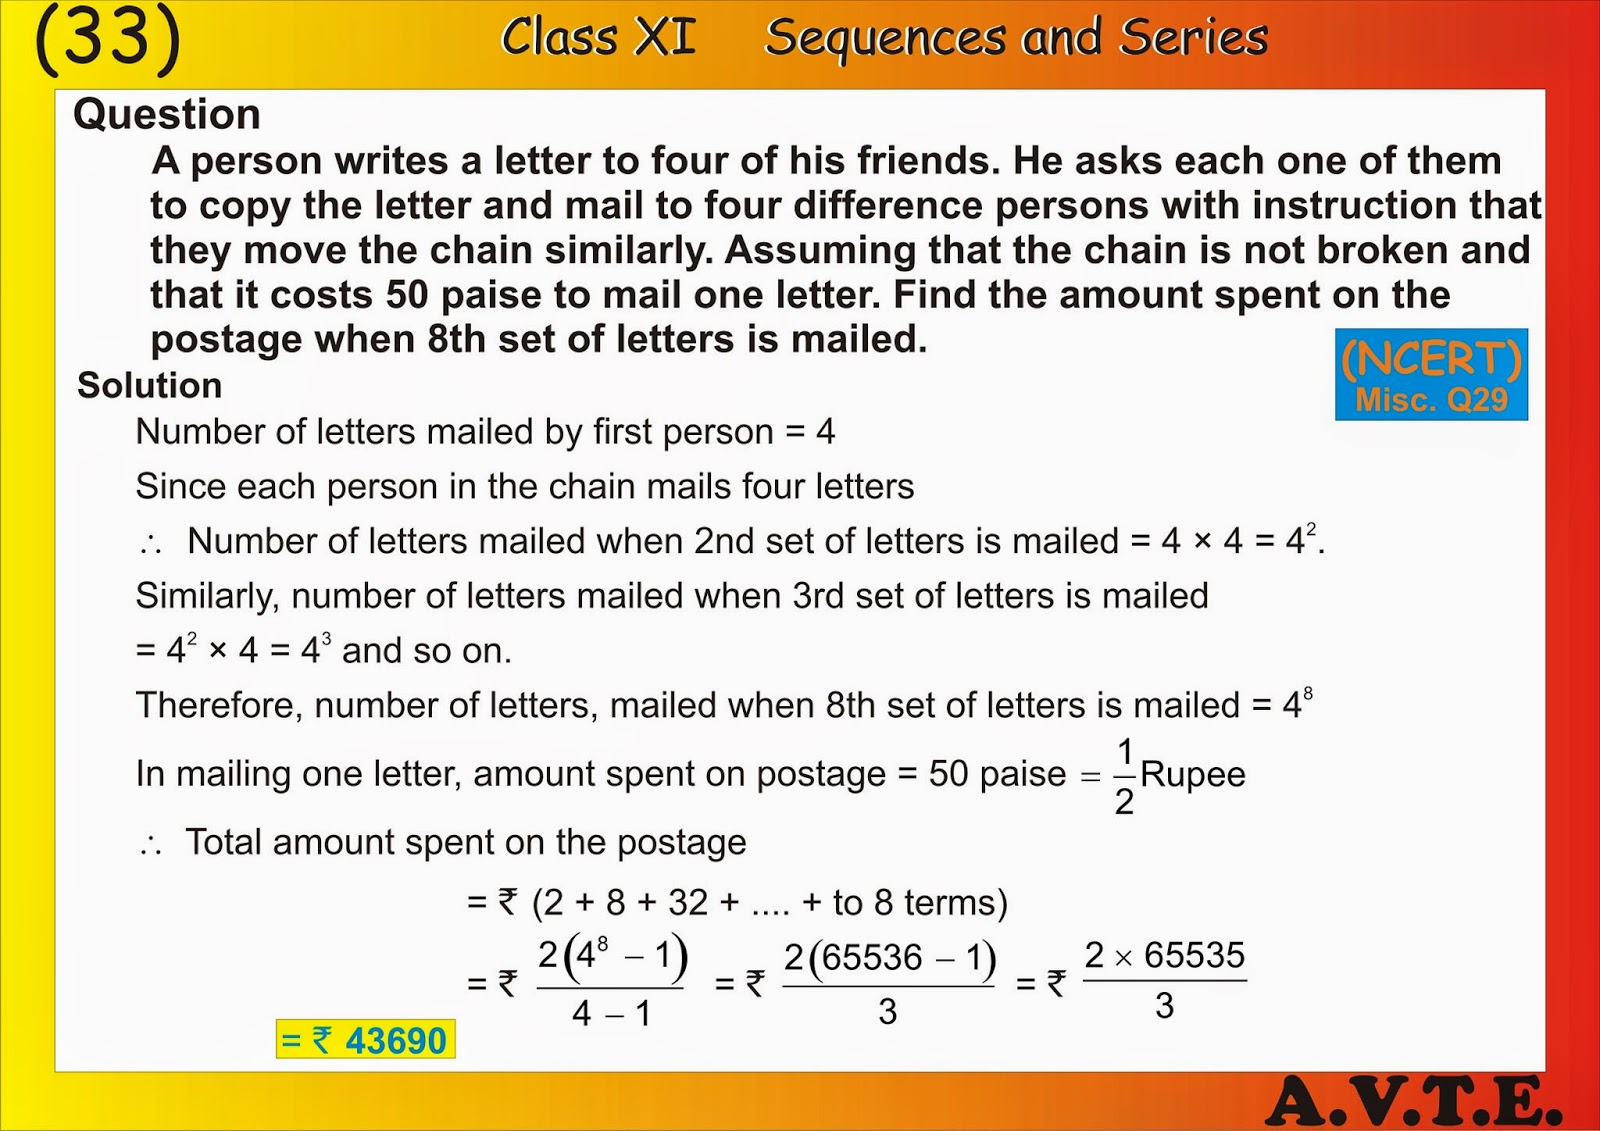 Maths4all: SEQUENCE & SERIES